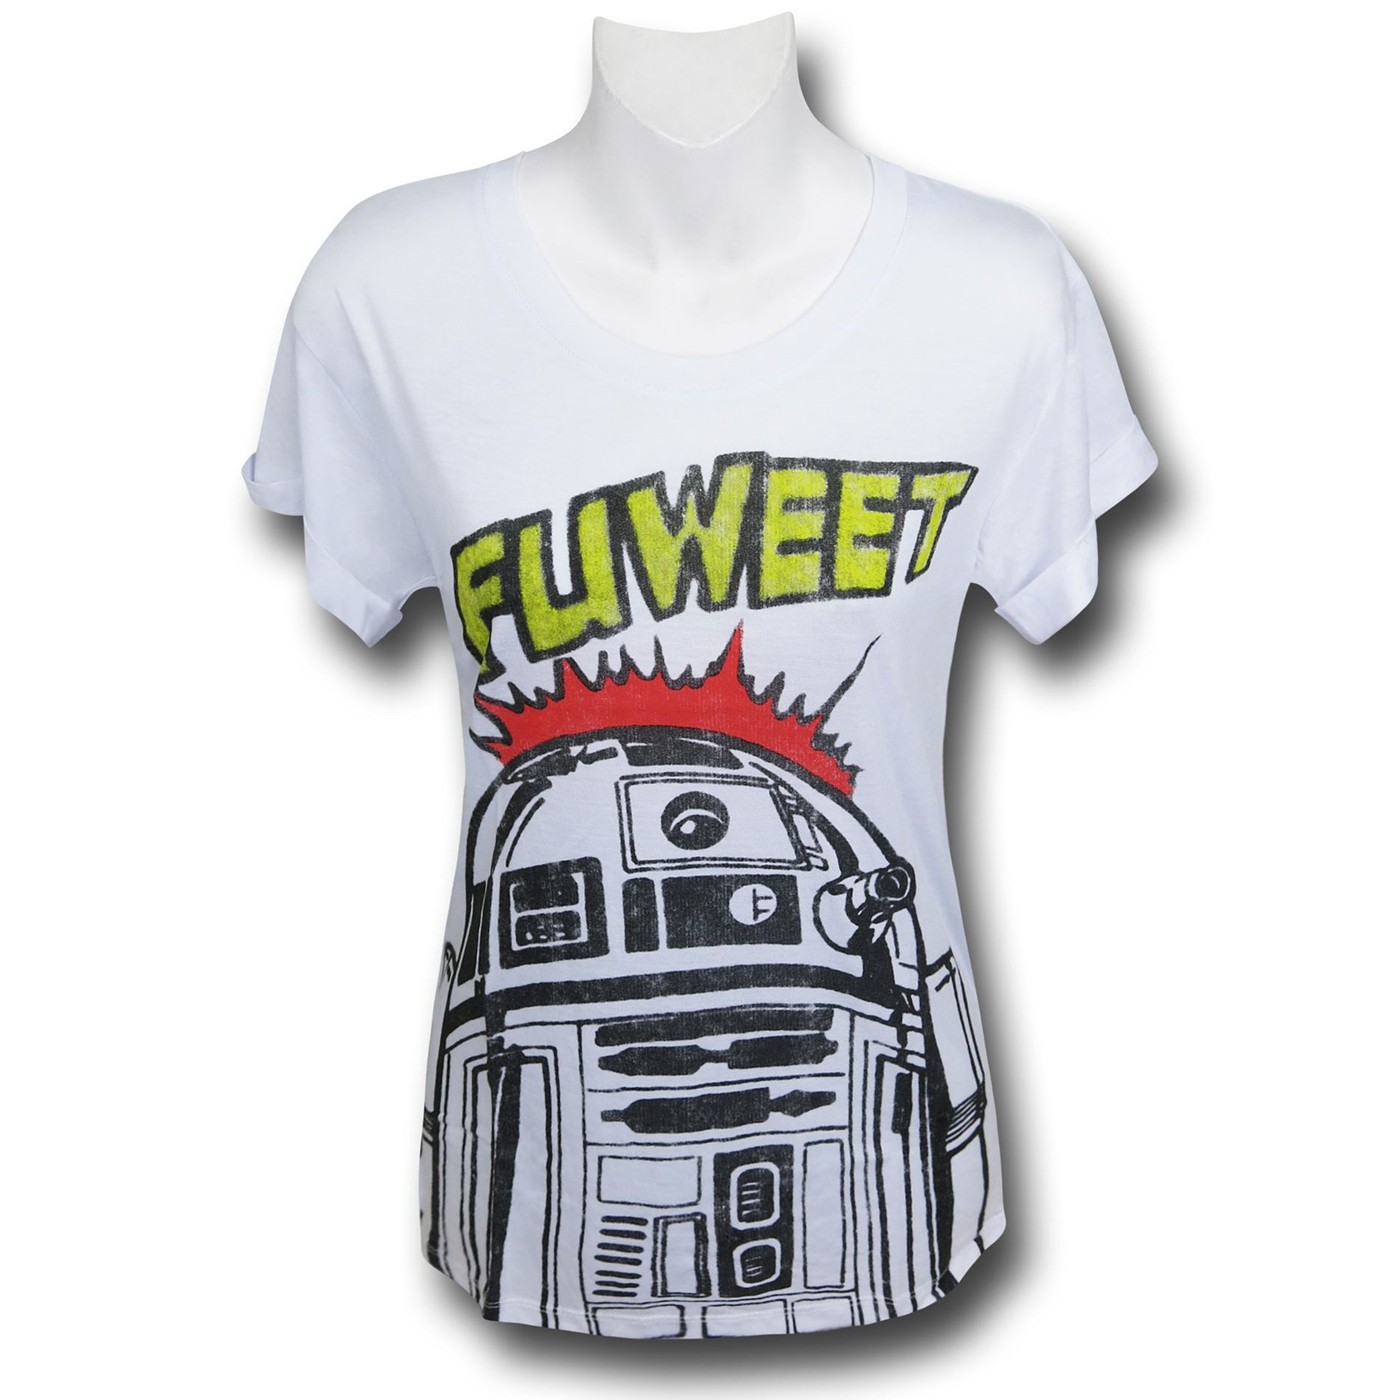 Star Wars R2D2 Fuweet Women's T-Shirt